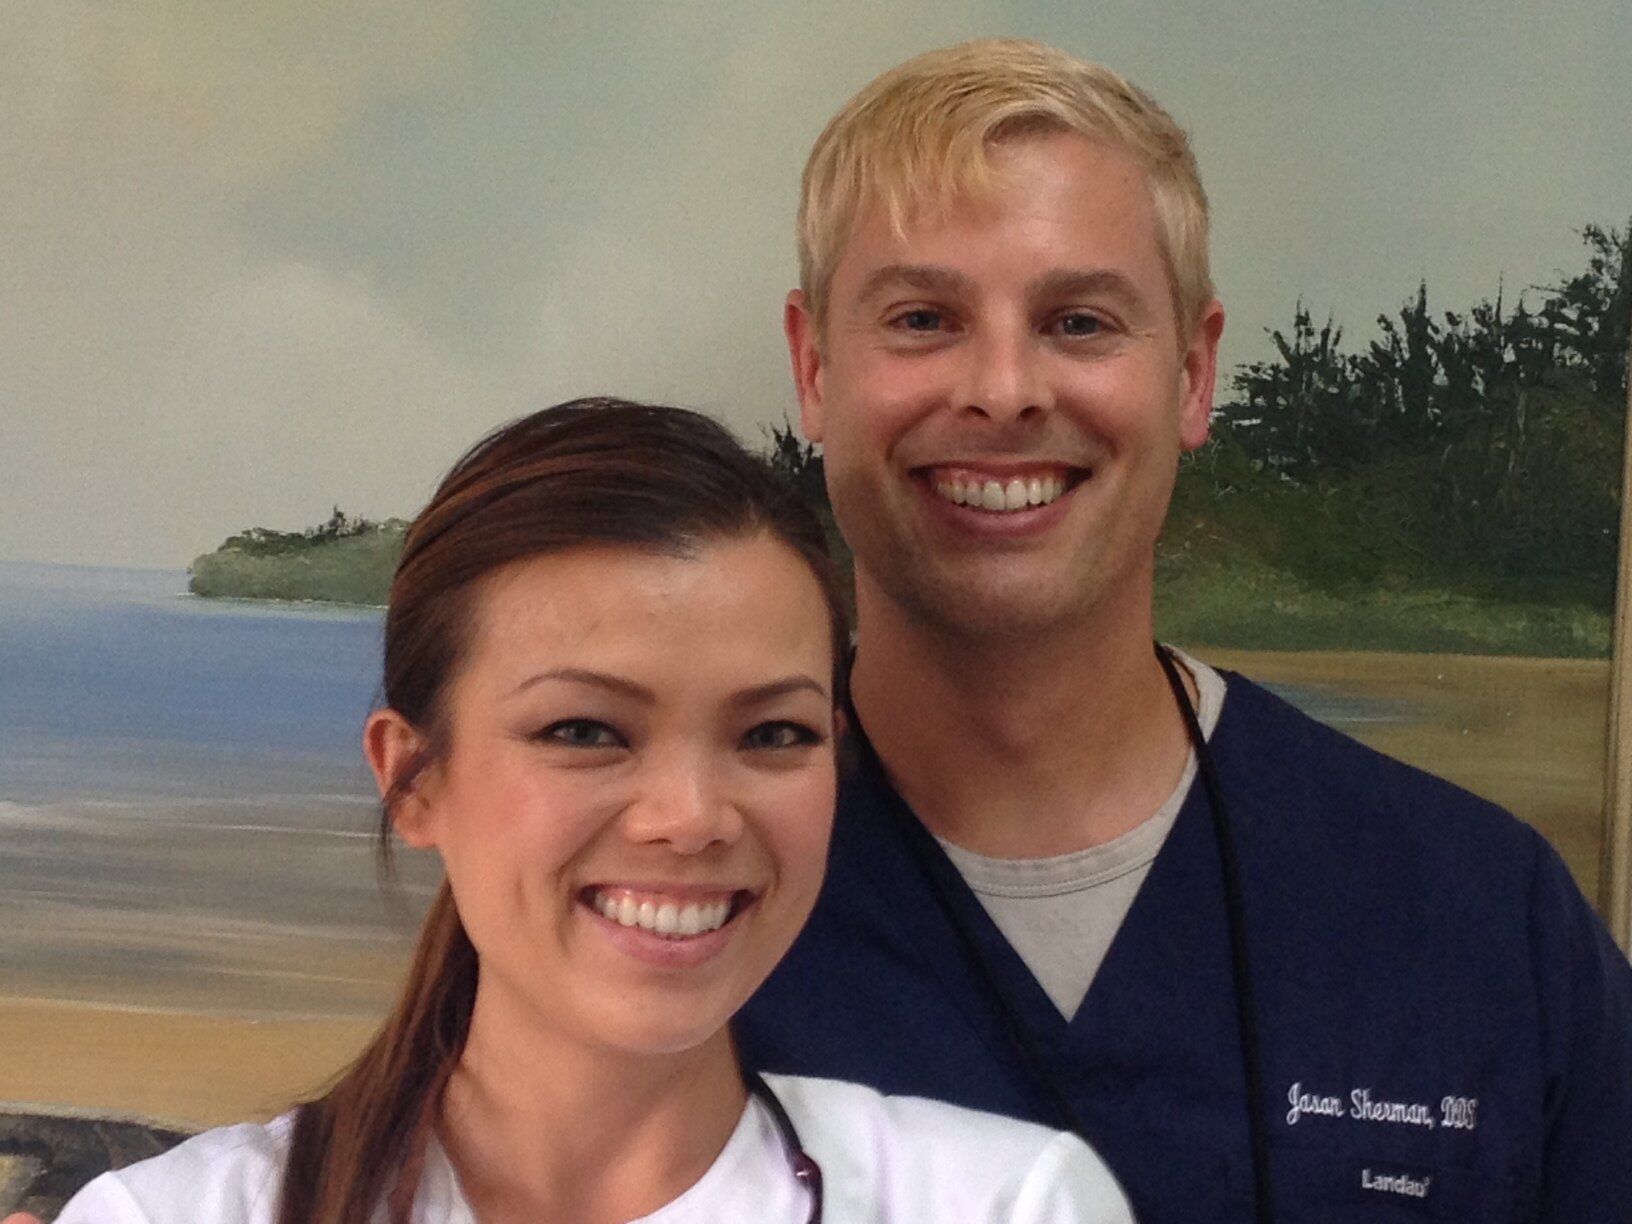 Dentist in Greenbrae.  Jason Sherman DDS, Katelyn Du DDS, http://t.co/8GCnN1q2m1, http://t.co/fTcR8gGNZI, http://t.co/mfEu6jWN09